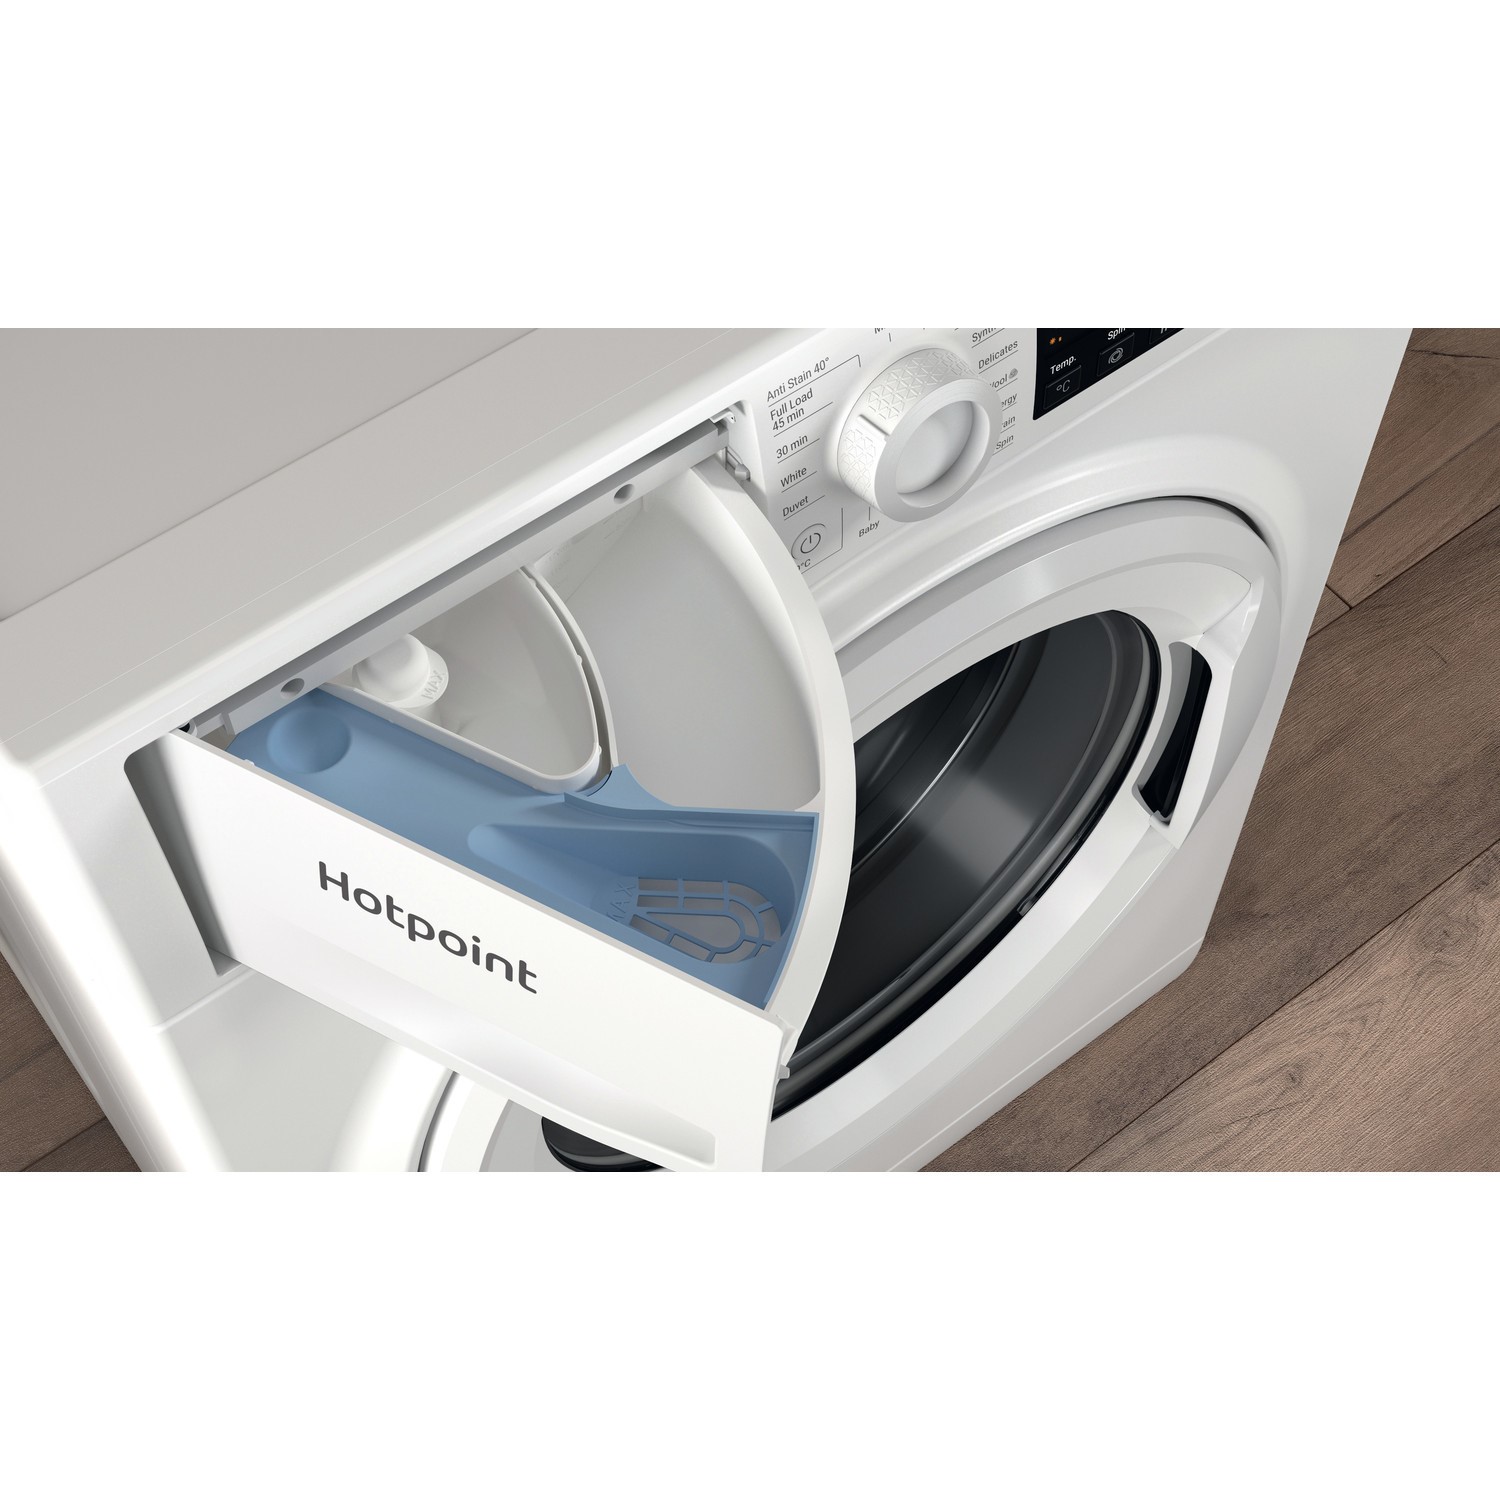 Hotpoint 8kg 1400rpm Freestanding Washing Machine - NSWM843CWUKN